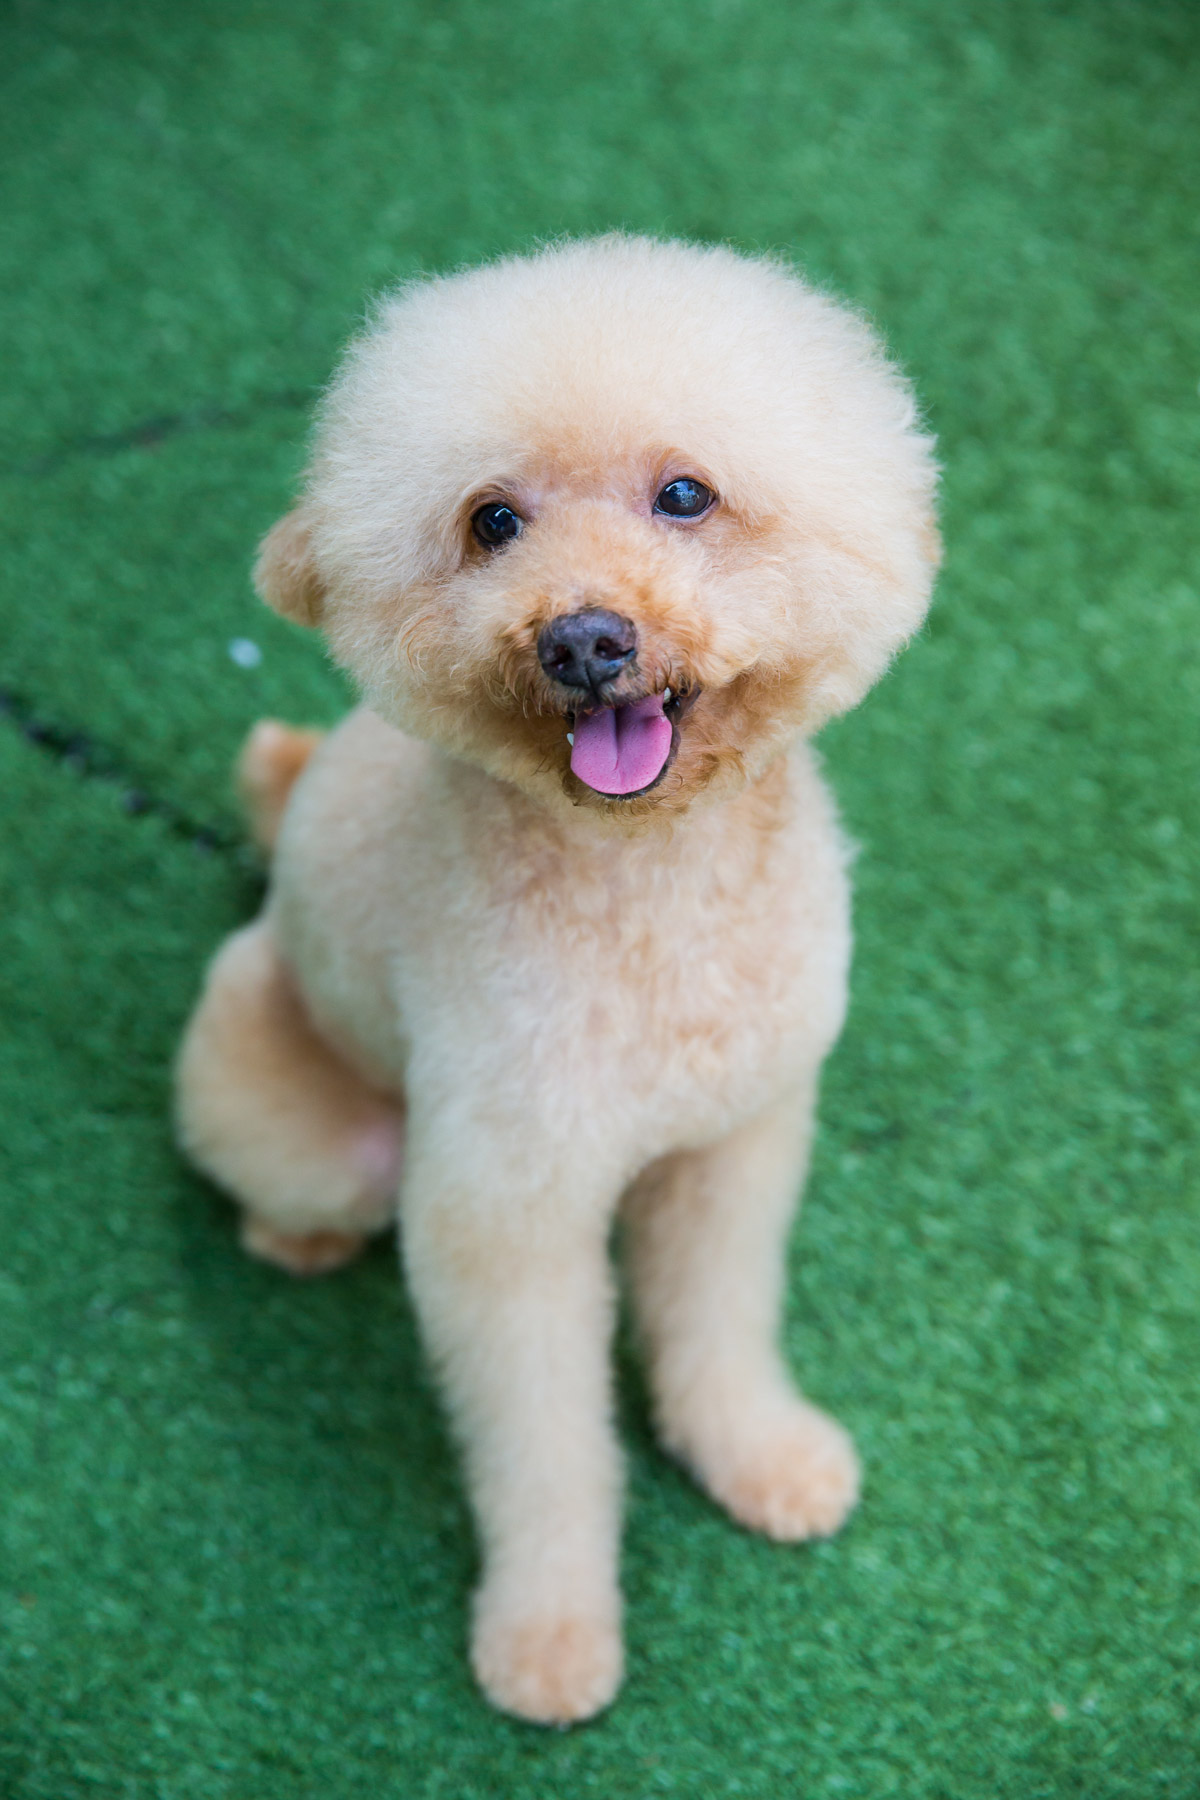 The Adorable Miniature Poodle